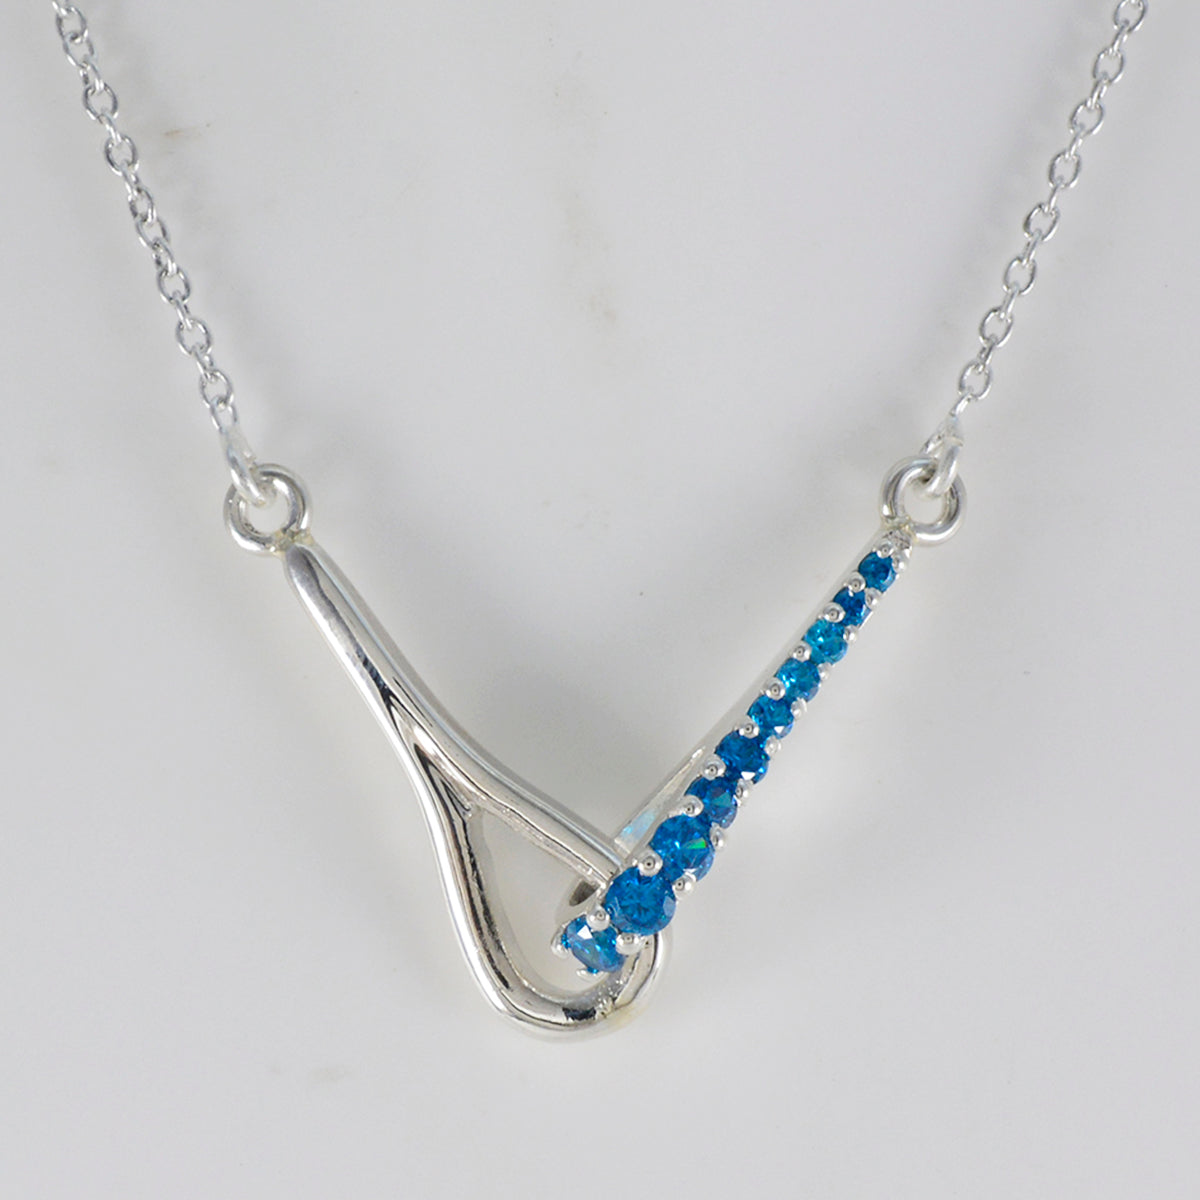 Riyo Glamorous Gemstone Round Faceted Blue Blue Topaz Sterling Silver Pendant Gift For Women